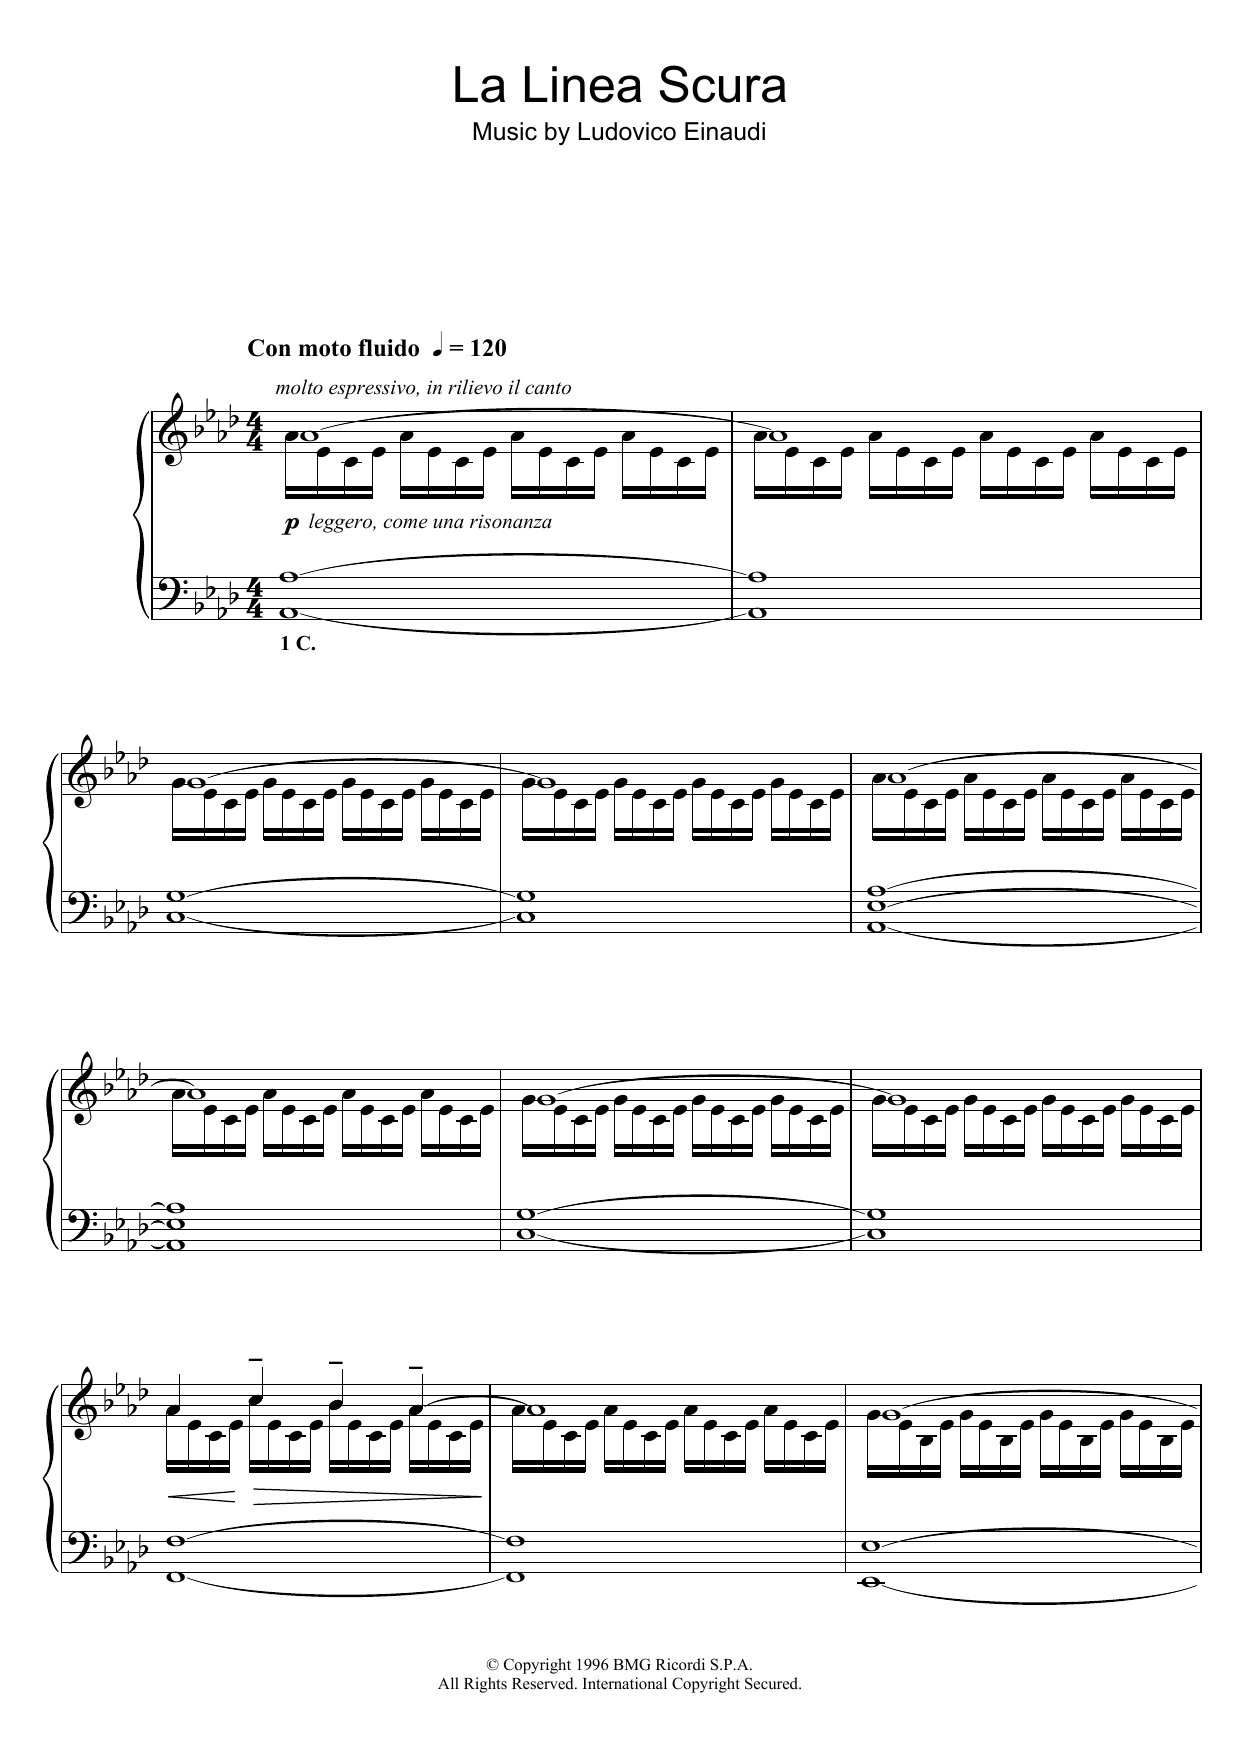 Ludovico Einaudi La Linea Scura Sheet Music Notes & Chords for Piano - Download or Print PDF